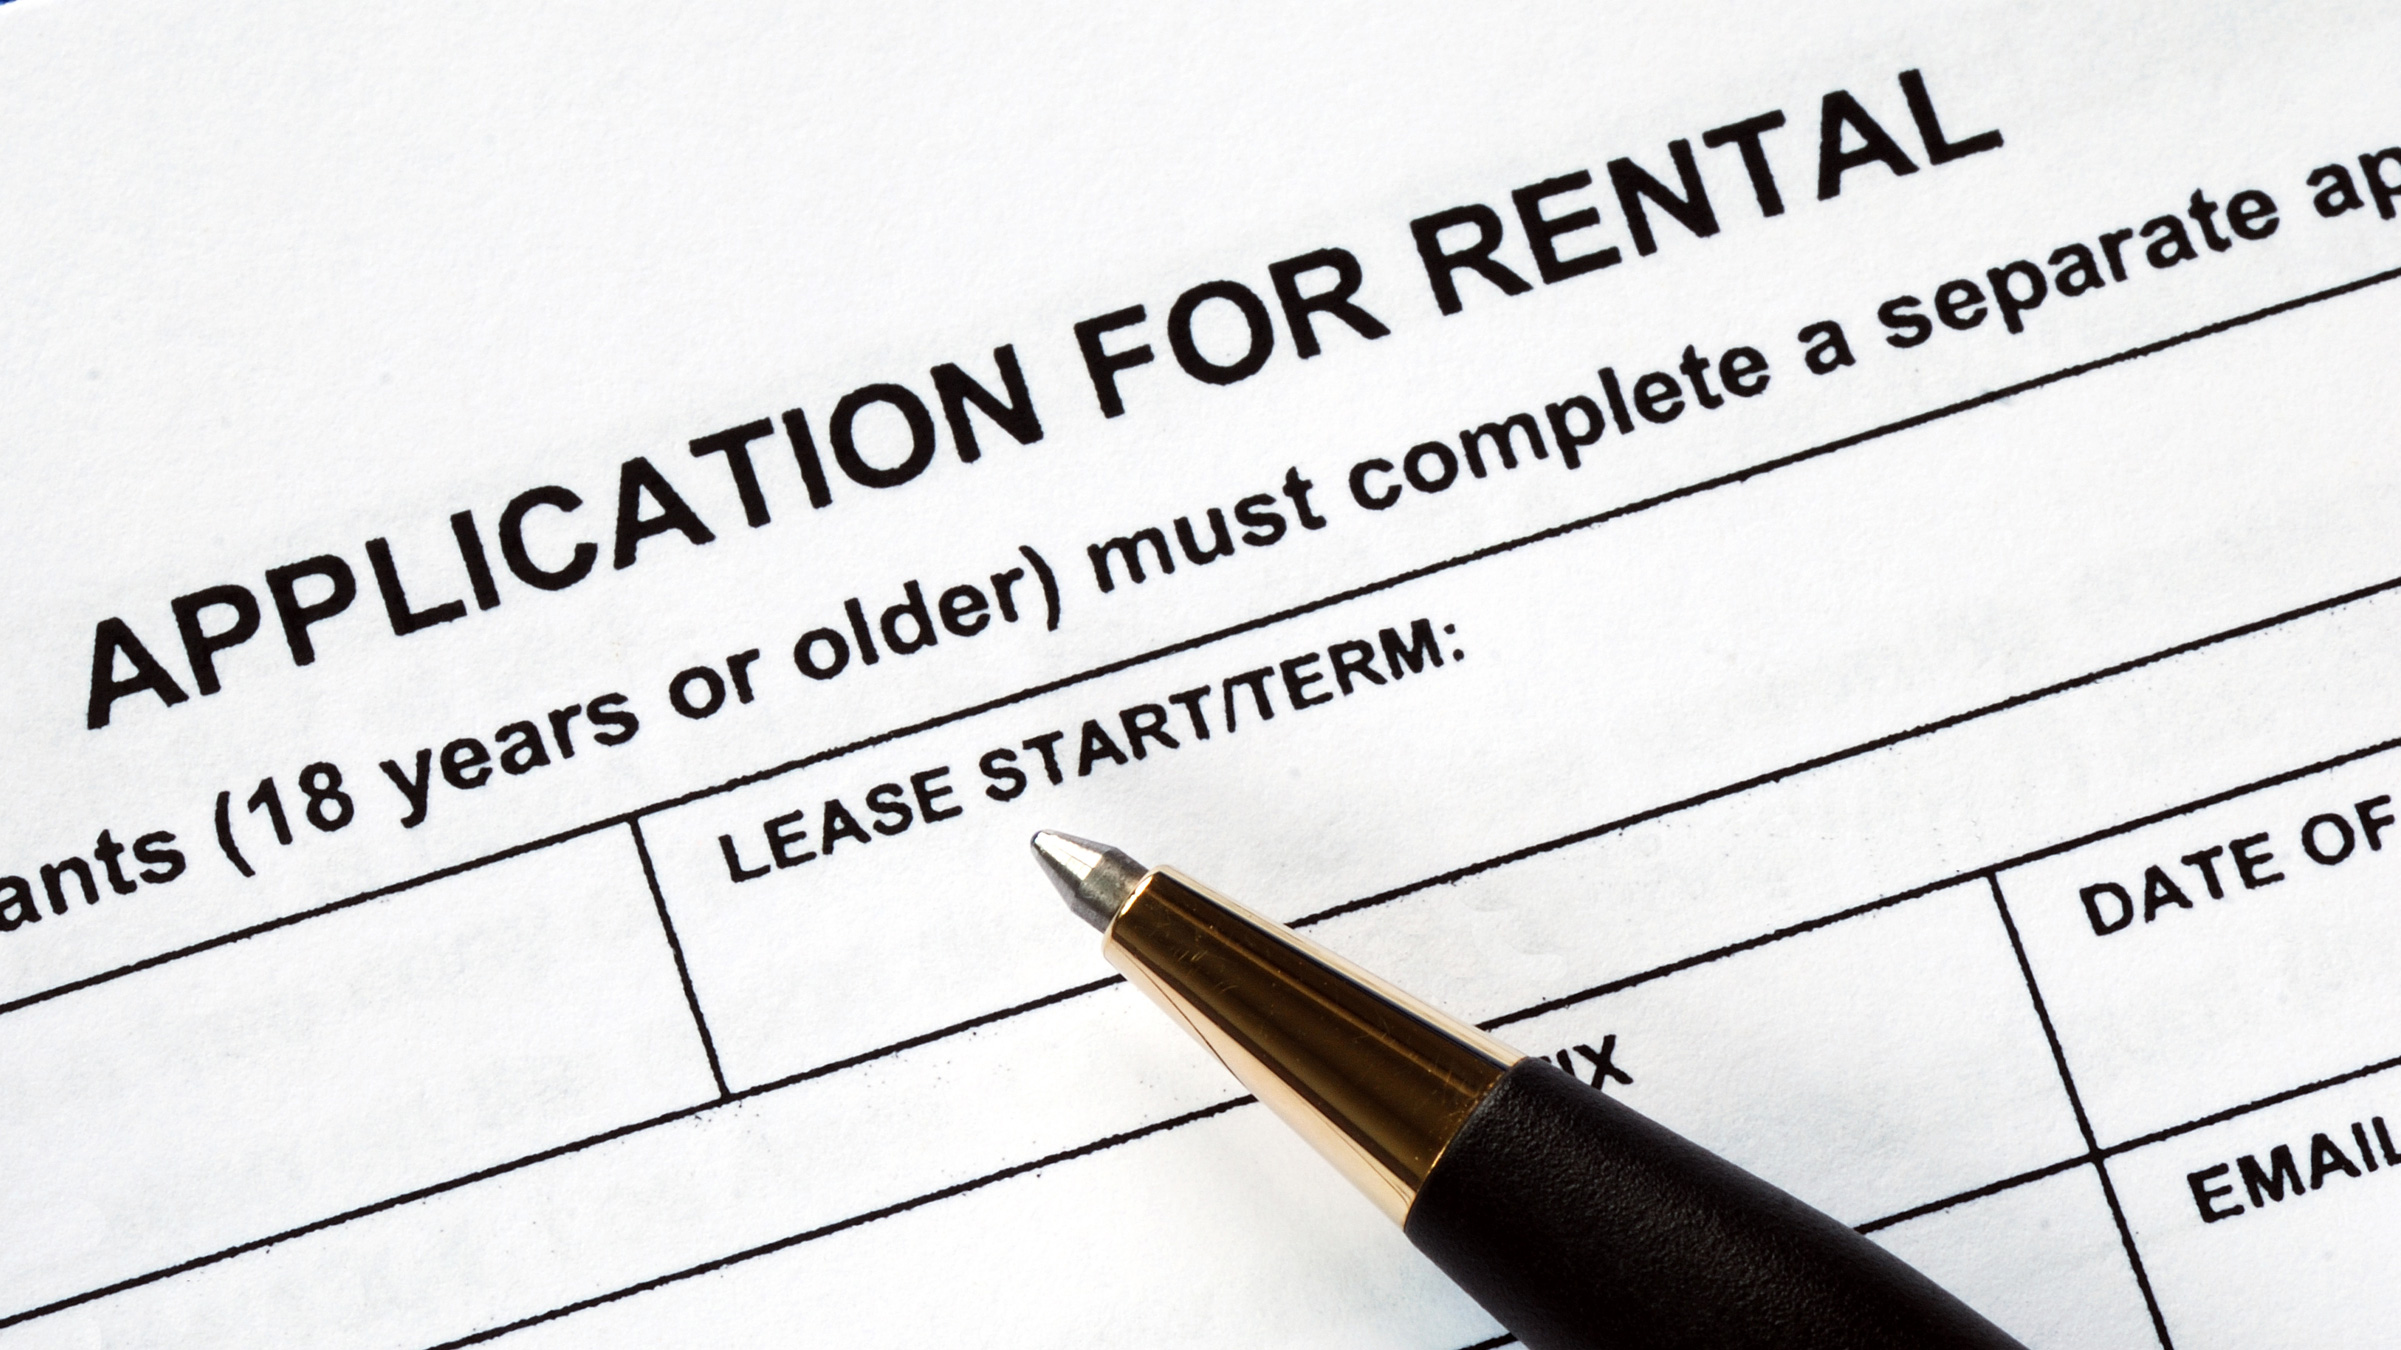 Residential Rental Application